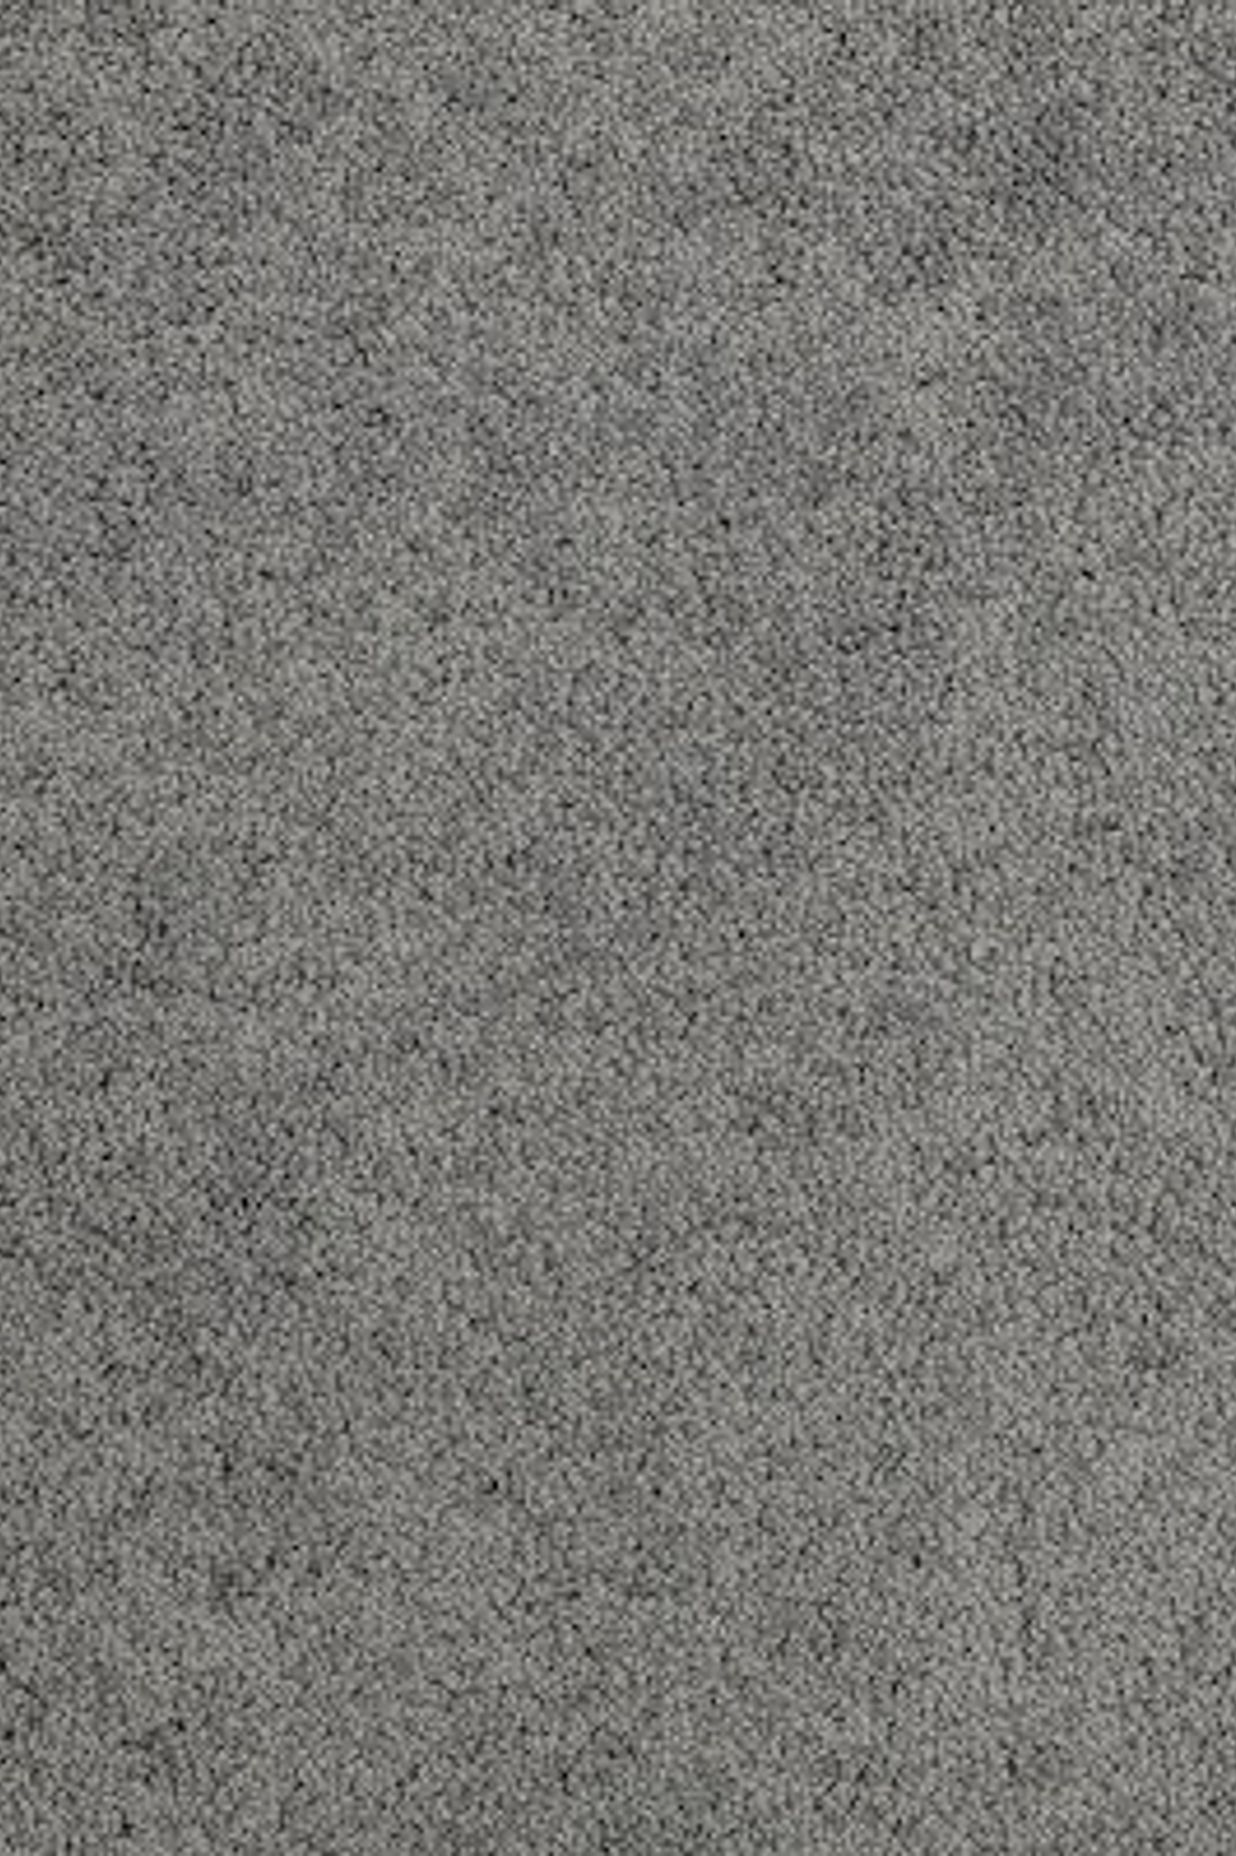 Alton nylon cut pile carpet by Andersons Floor Coverings